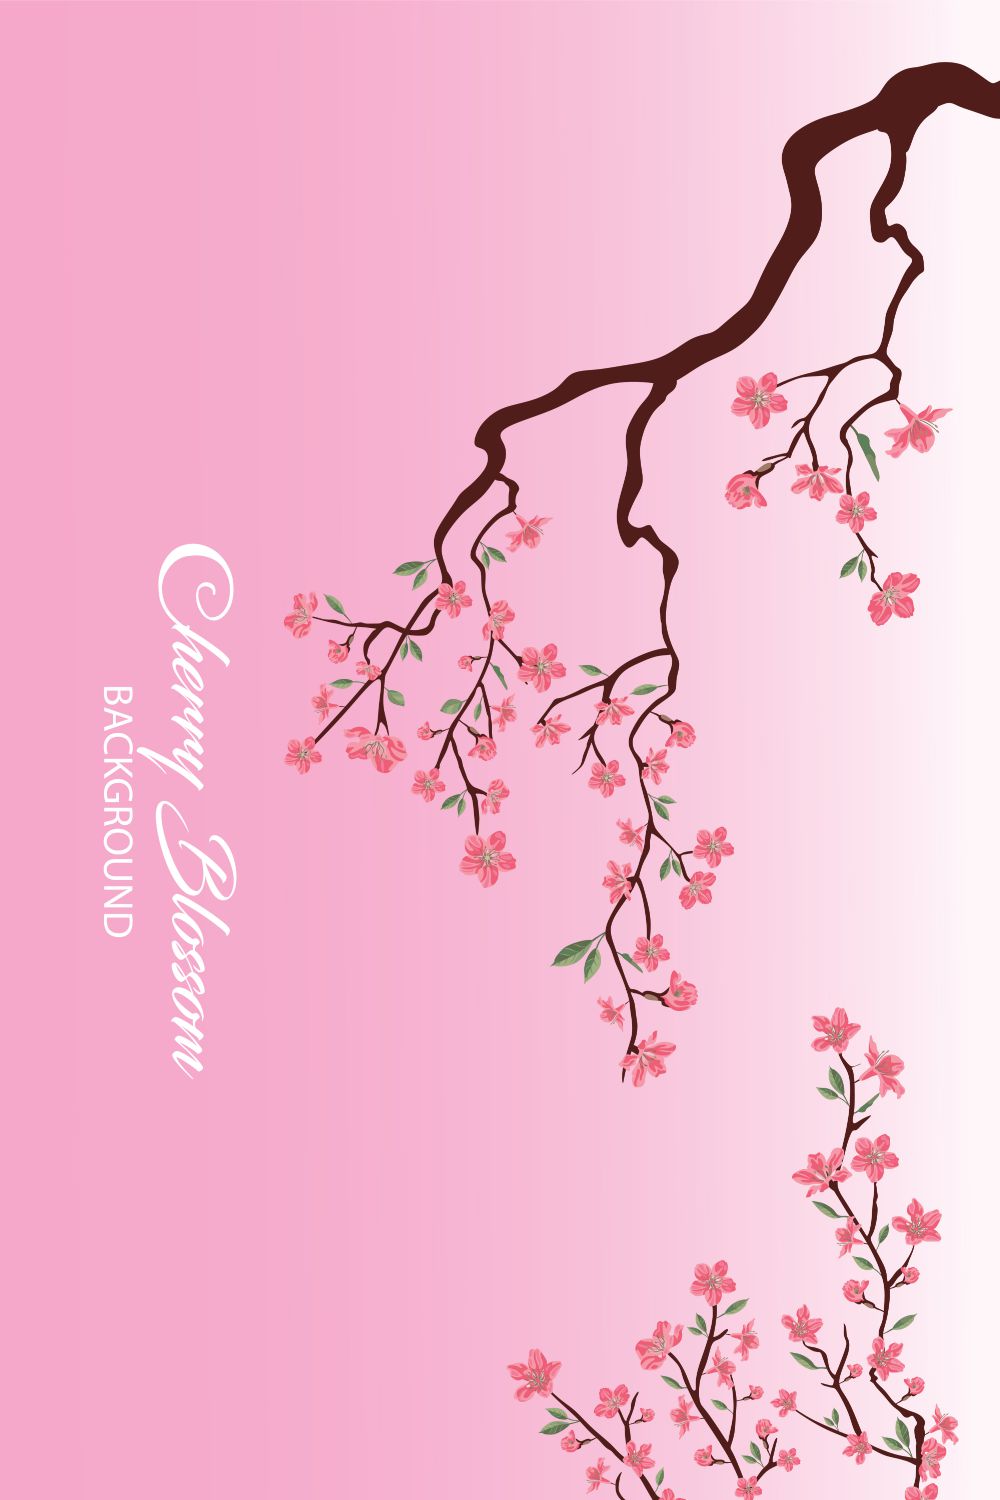 Cherry blossom Illustration pinterest preview image.